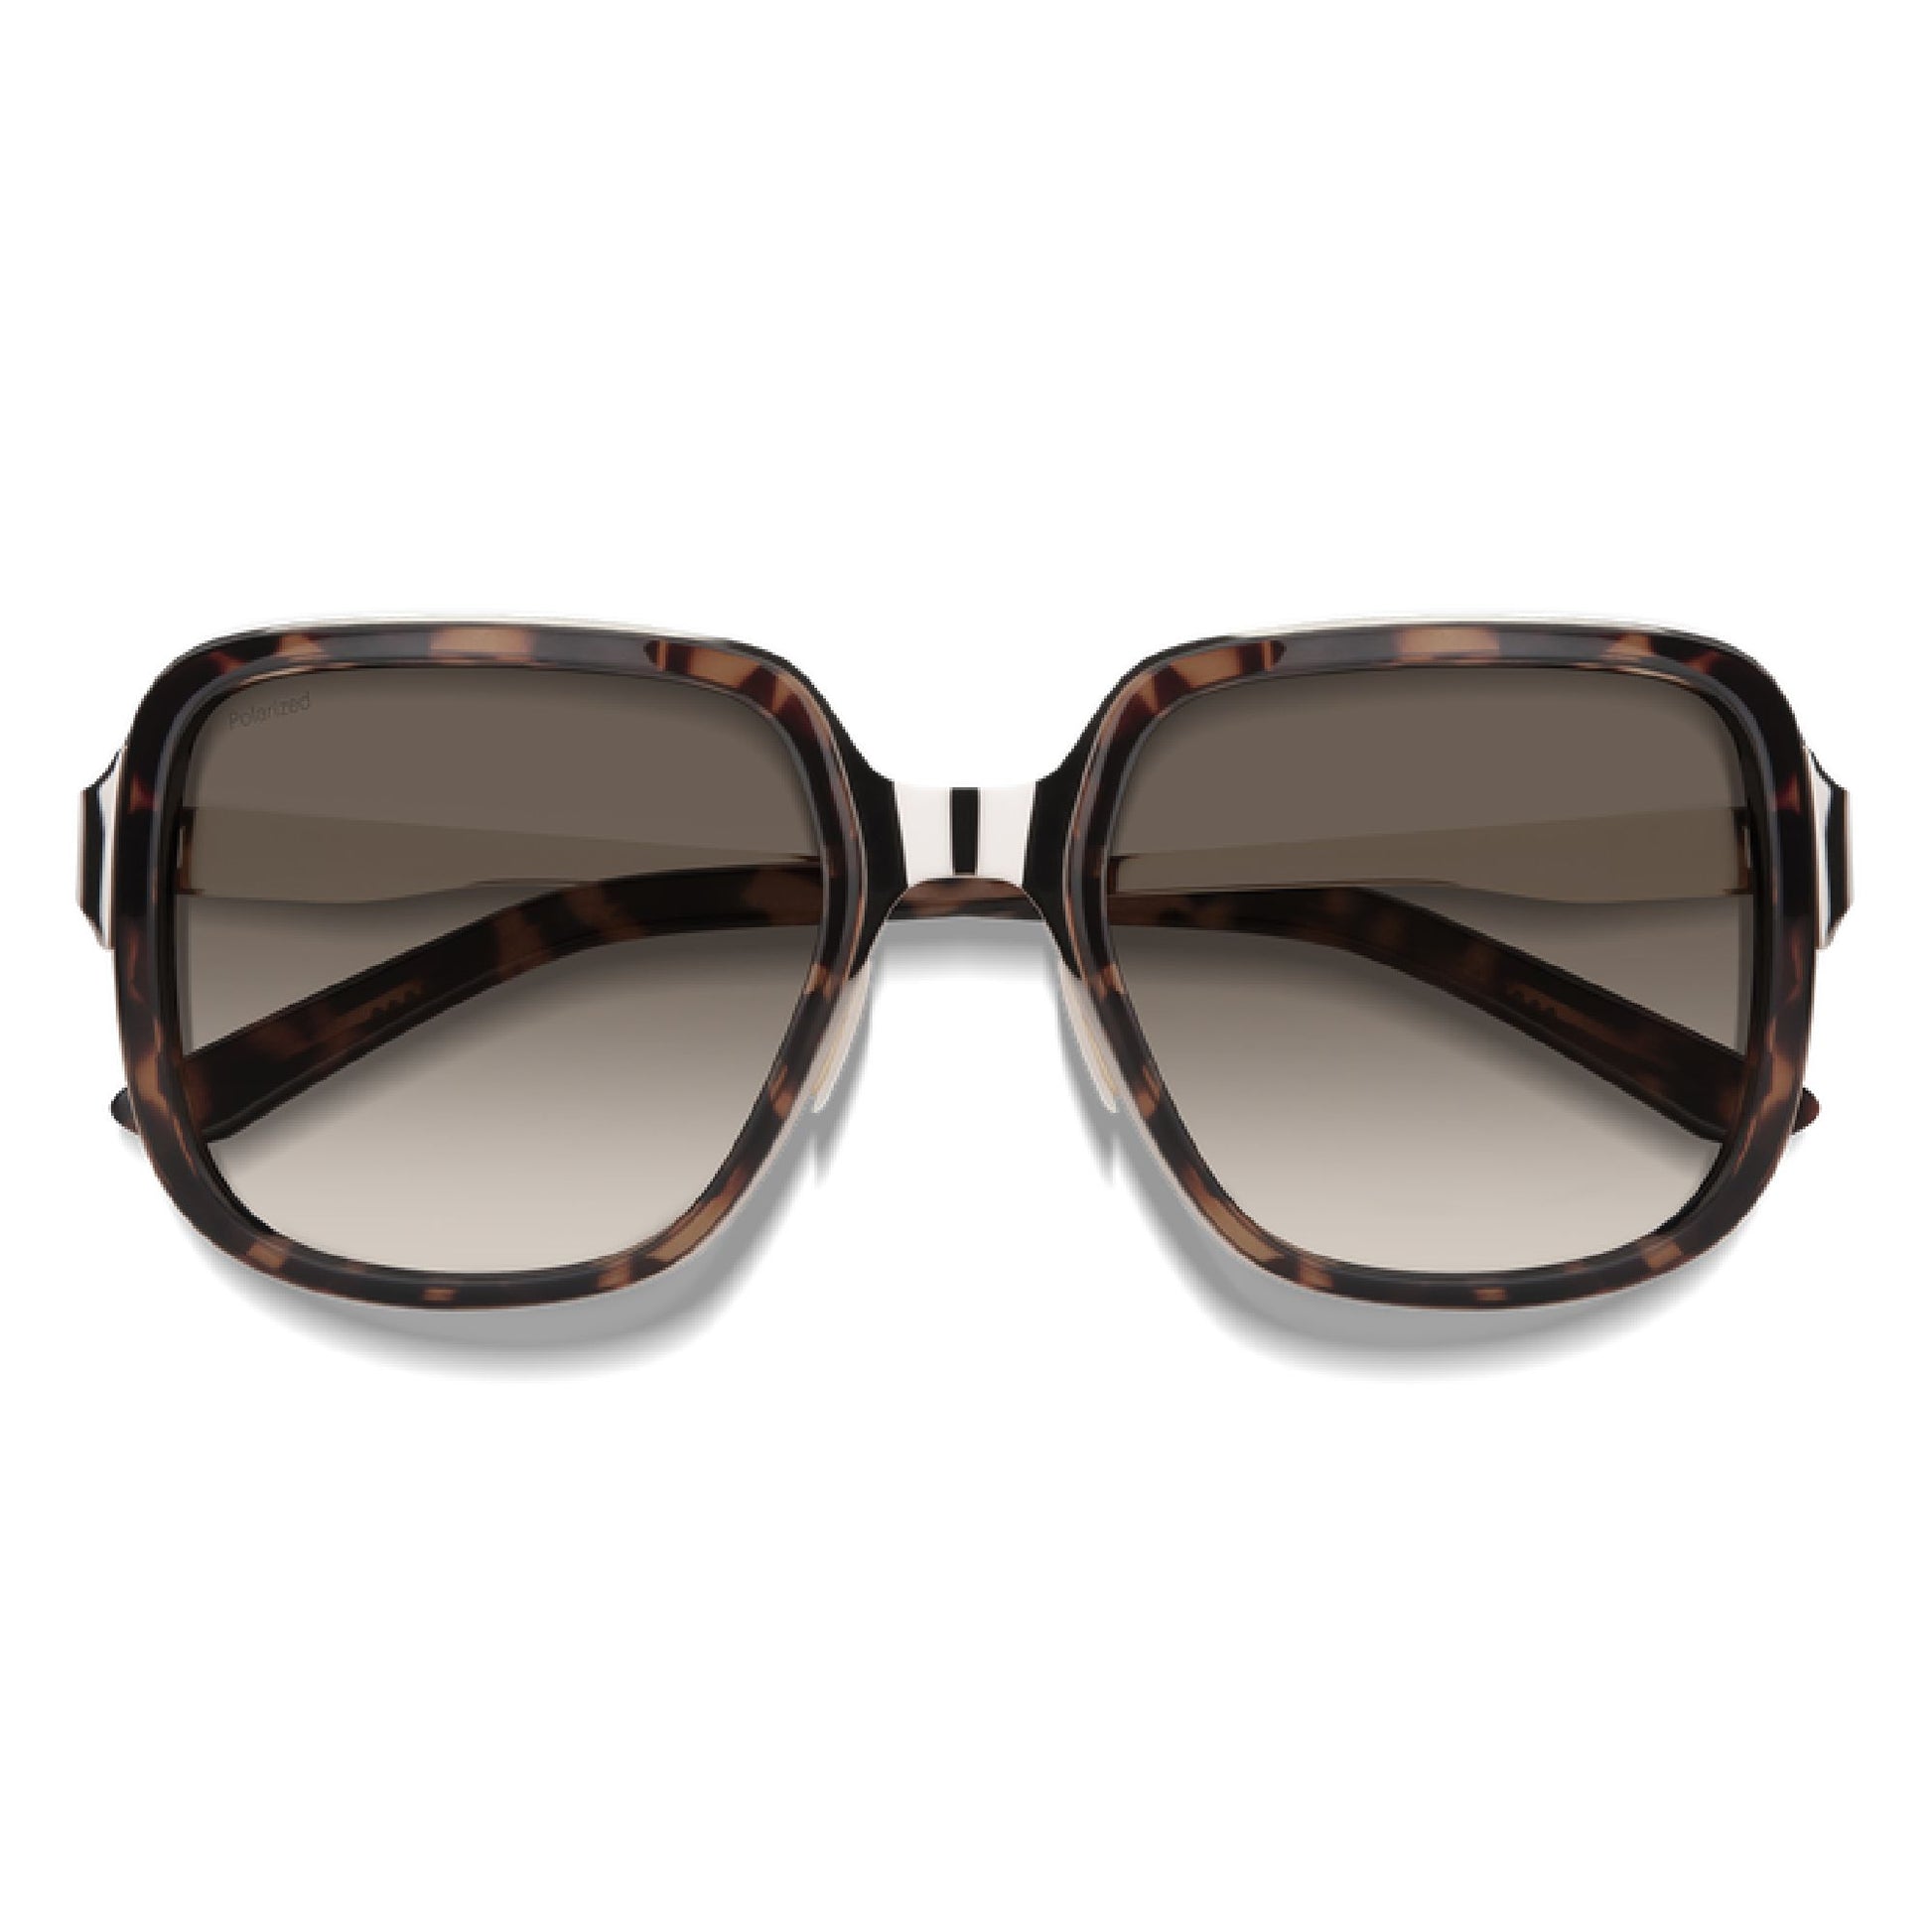 Smith Aveline Sunglasses Tortoise Polarized Brown Gradient Sunglasses